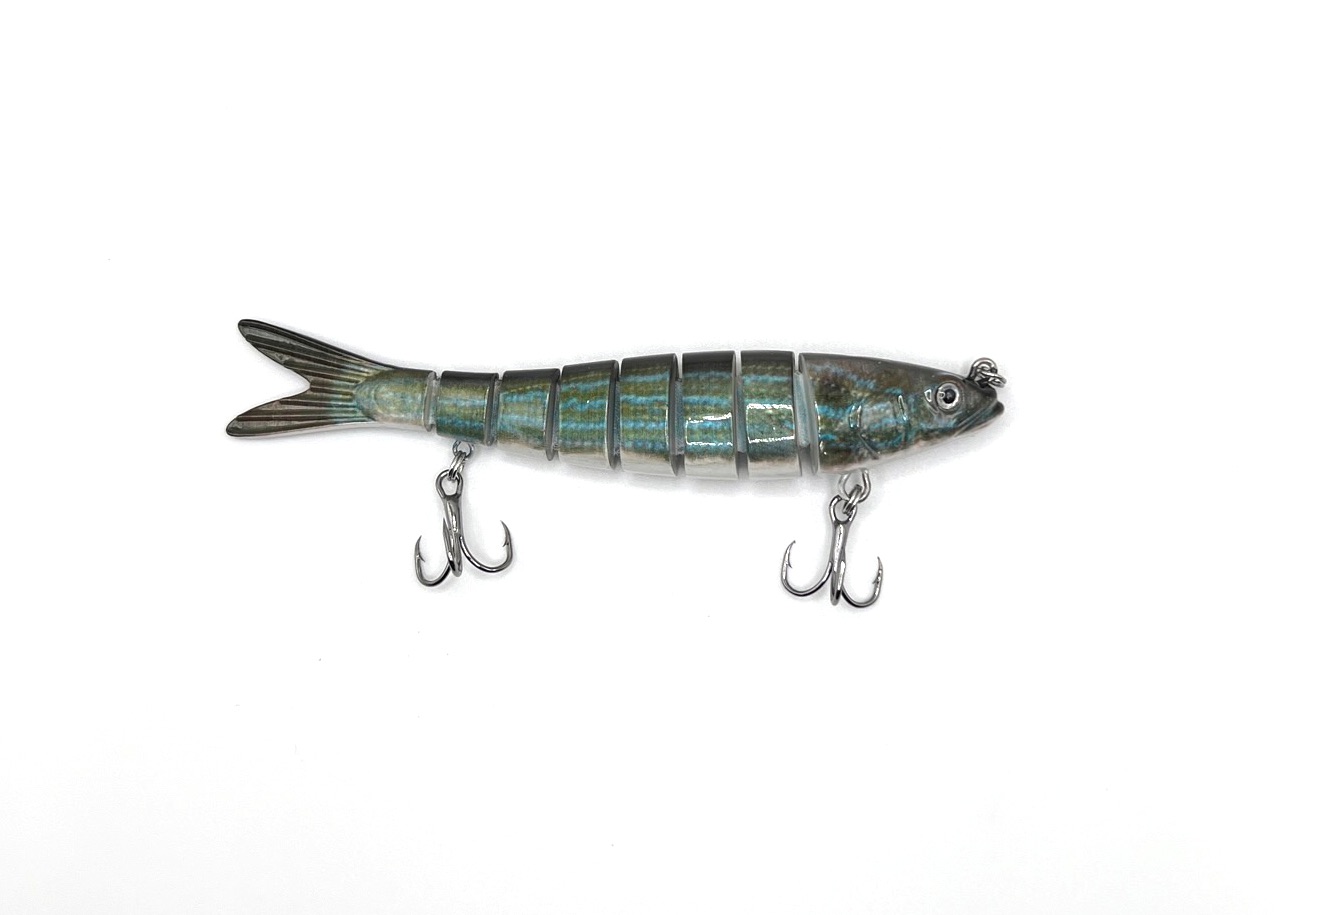 Piranha Raptor Co. → Segmented Lifelike Fishing Lure for Bass, Trout, and  Walleye